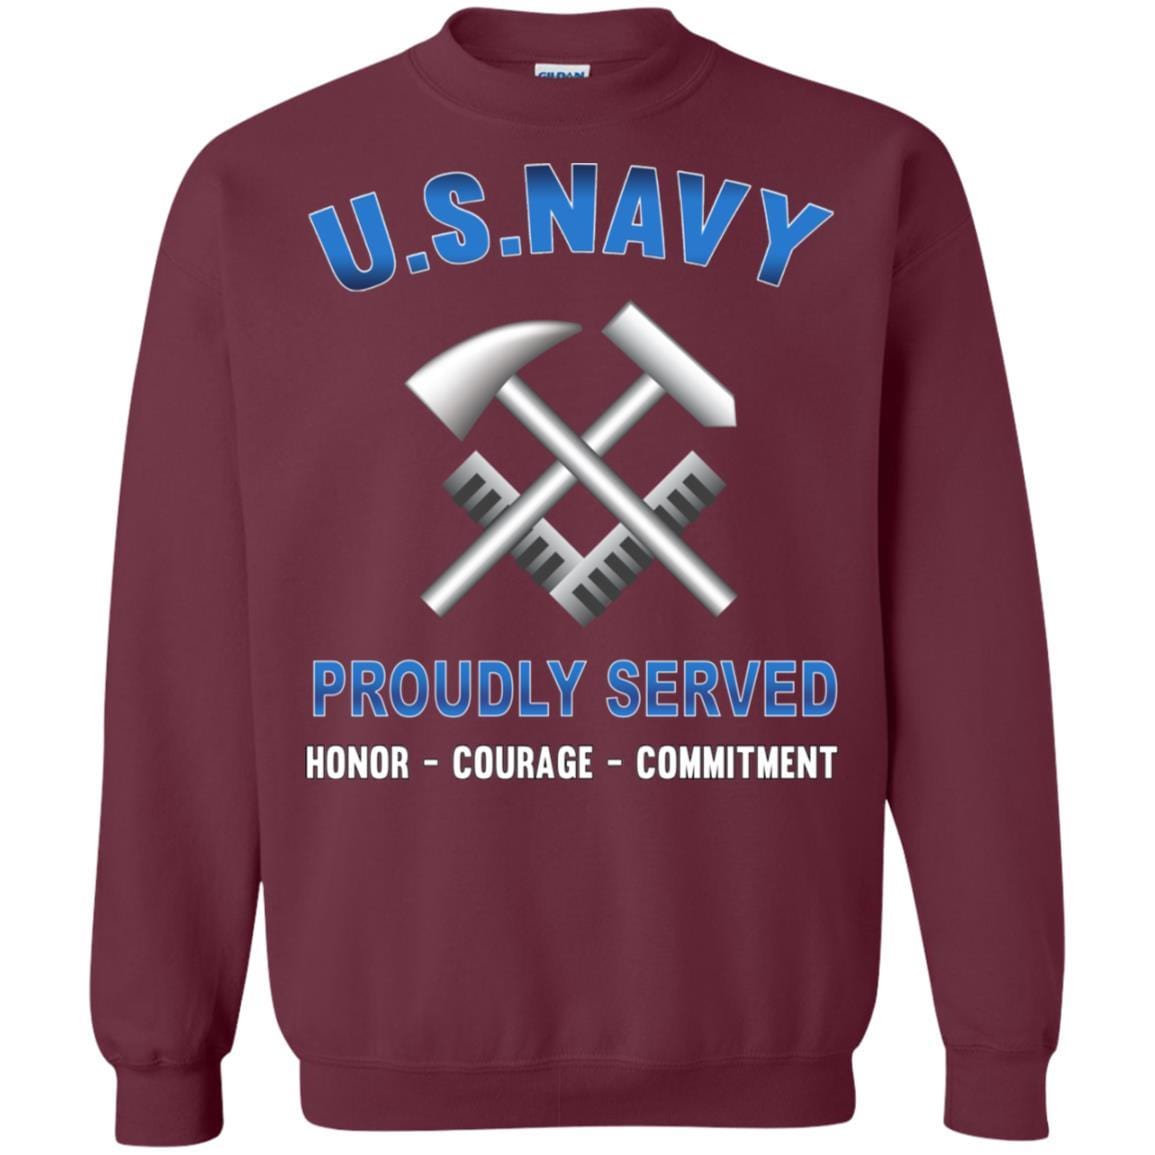 Navy Hull Maintenance Technician Navy HT - Proudly Served T-Shirt For Men On Front-TShirt-Navy-Veterans Nation